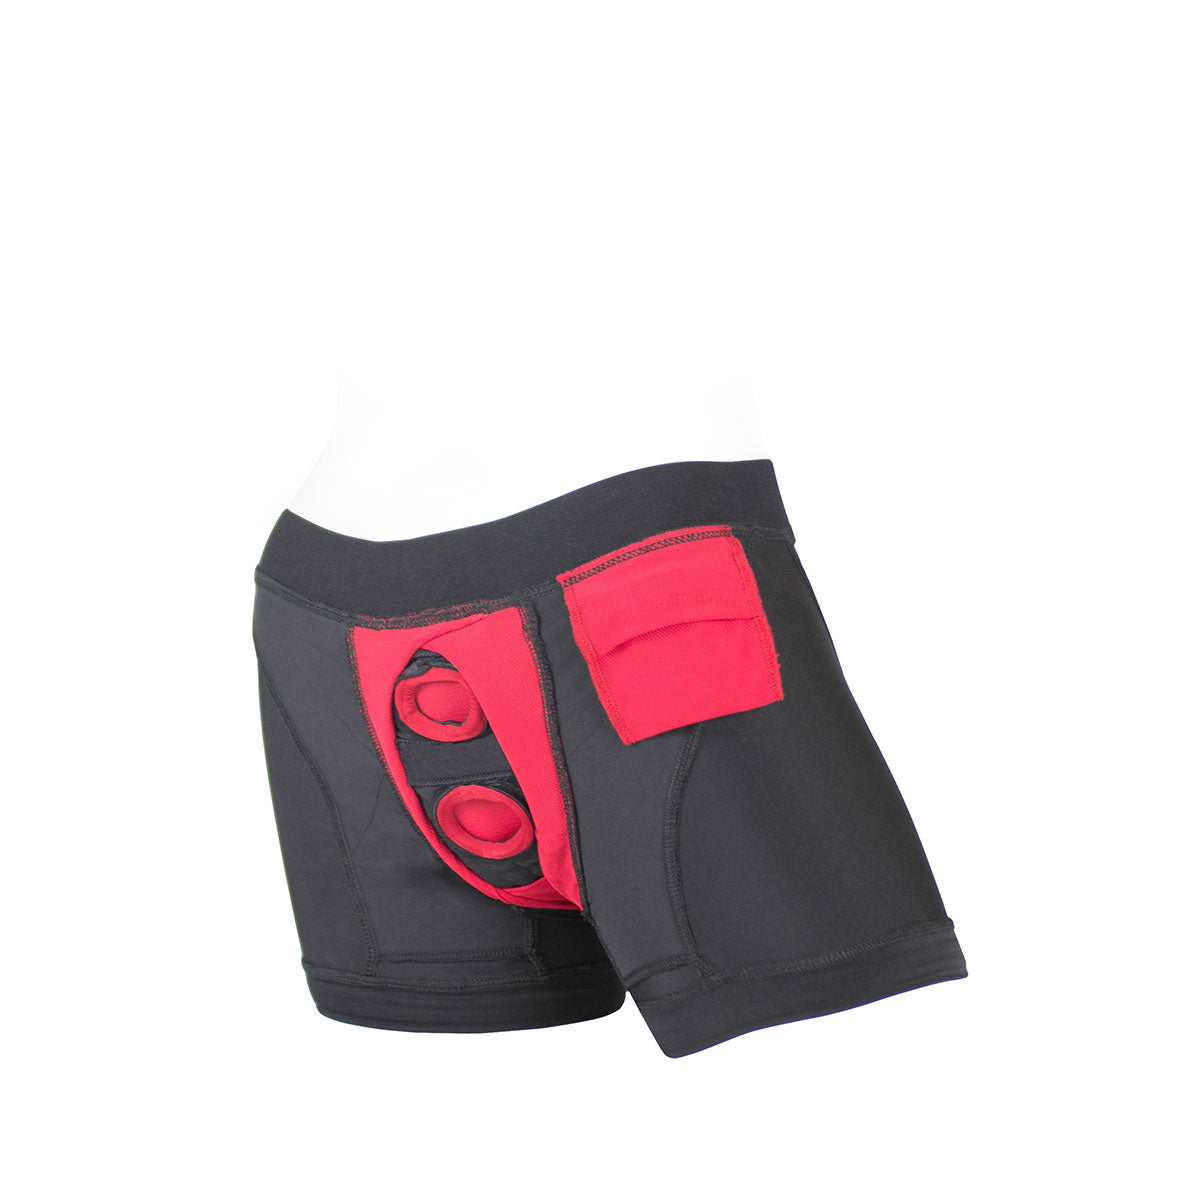 SpareParts Tomboii Black-Red Nylon - Large Intimates Adult Boutique